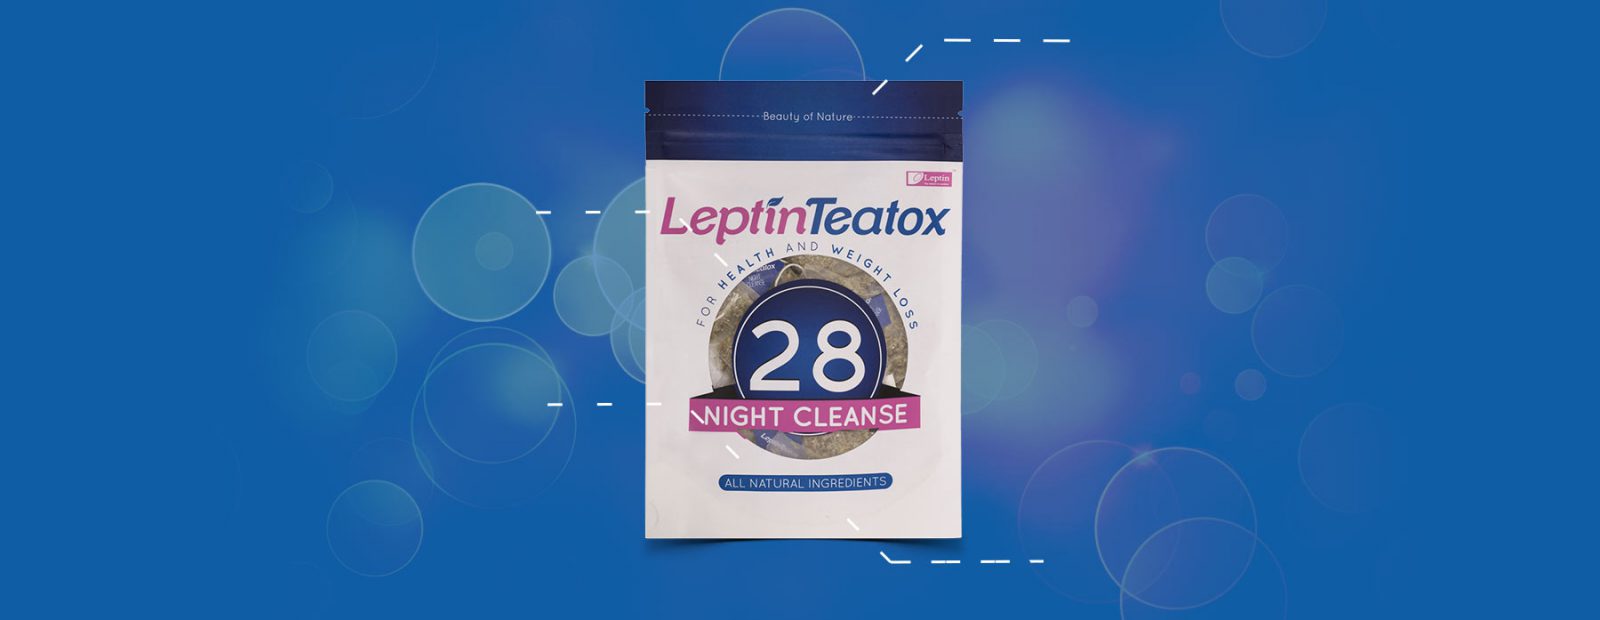 Leptin Teatox Diet Tea Night Cleanse